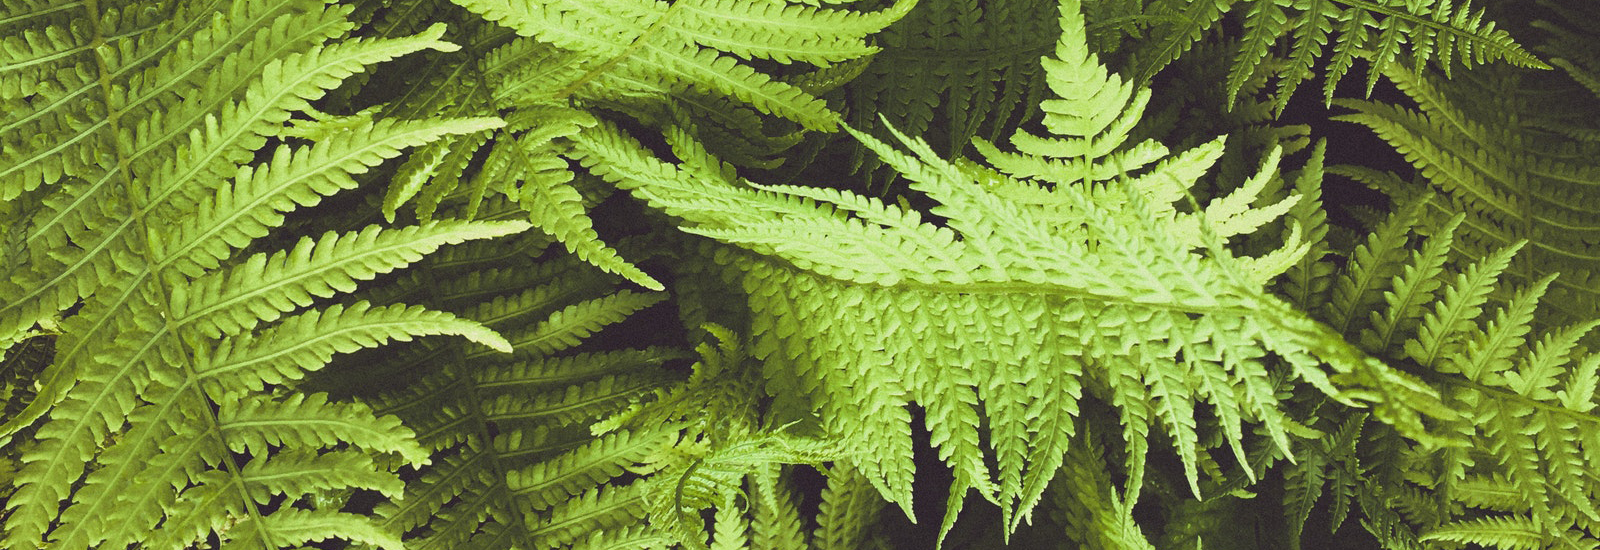 Close up of ferns